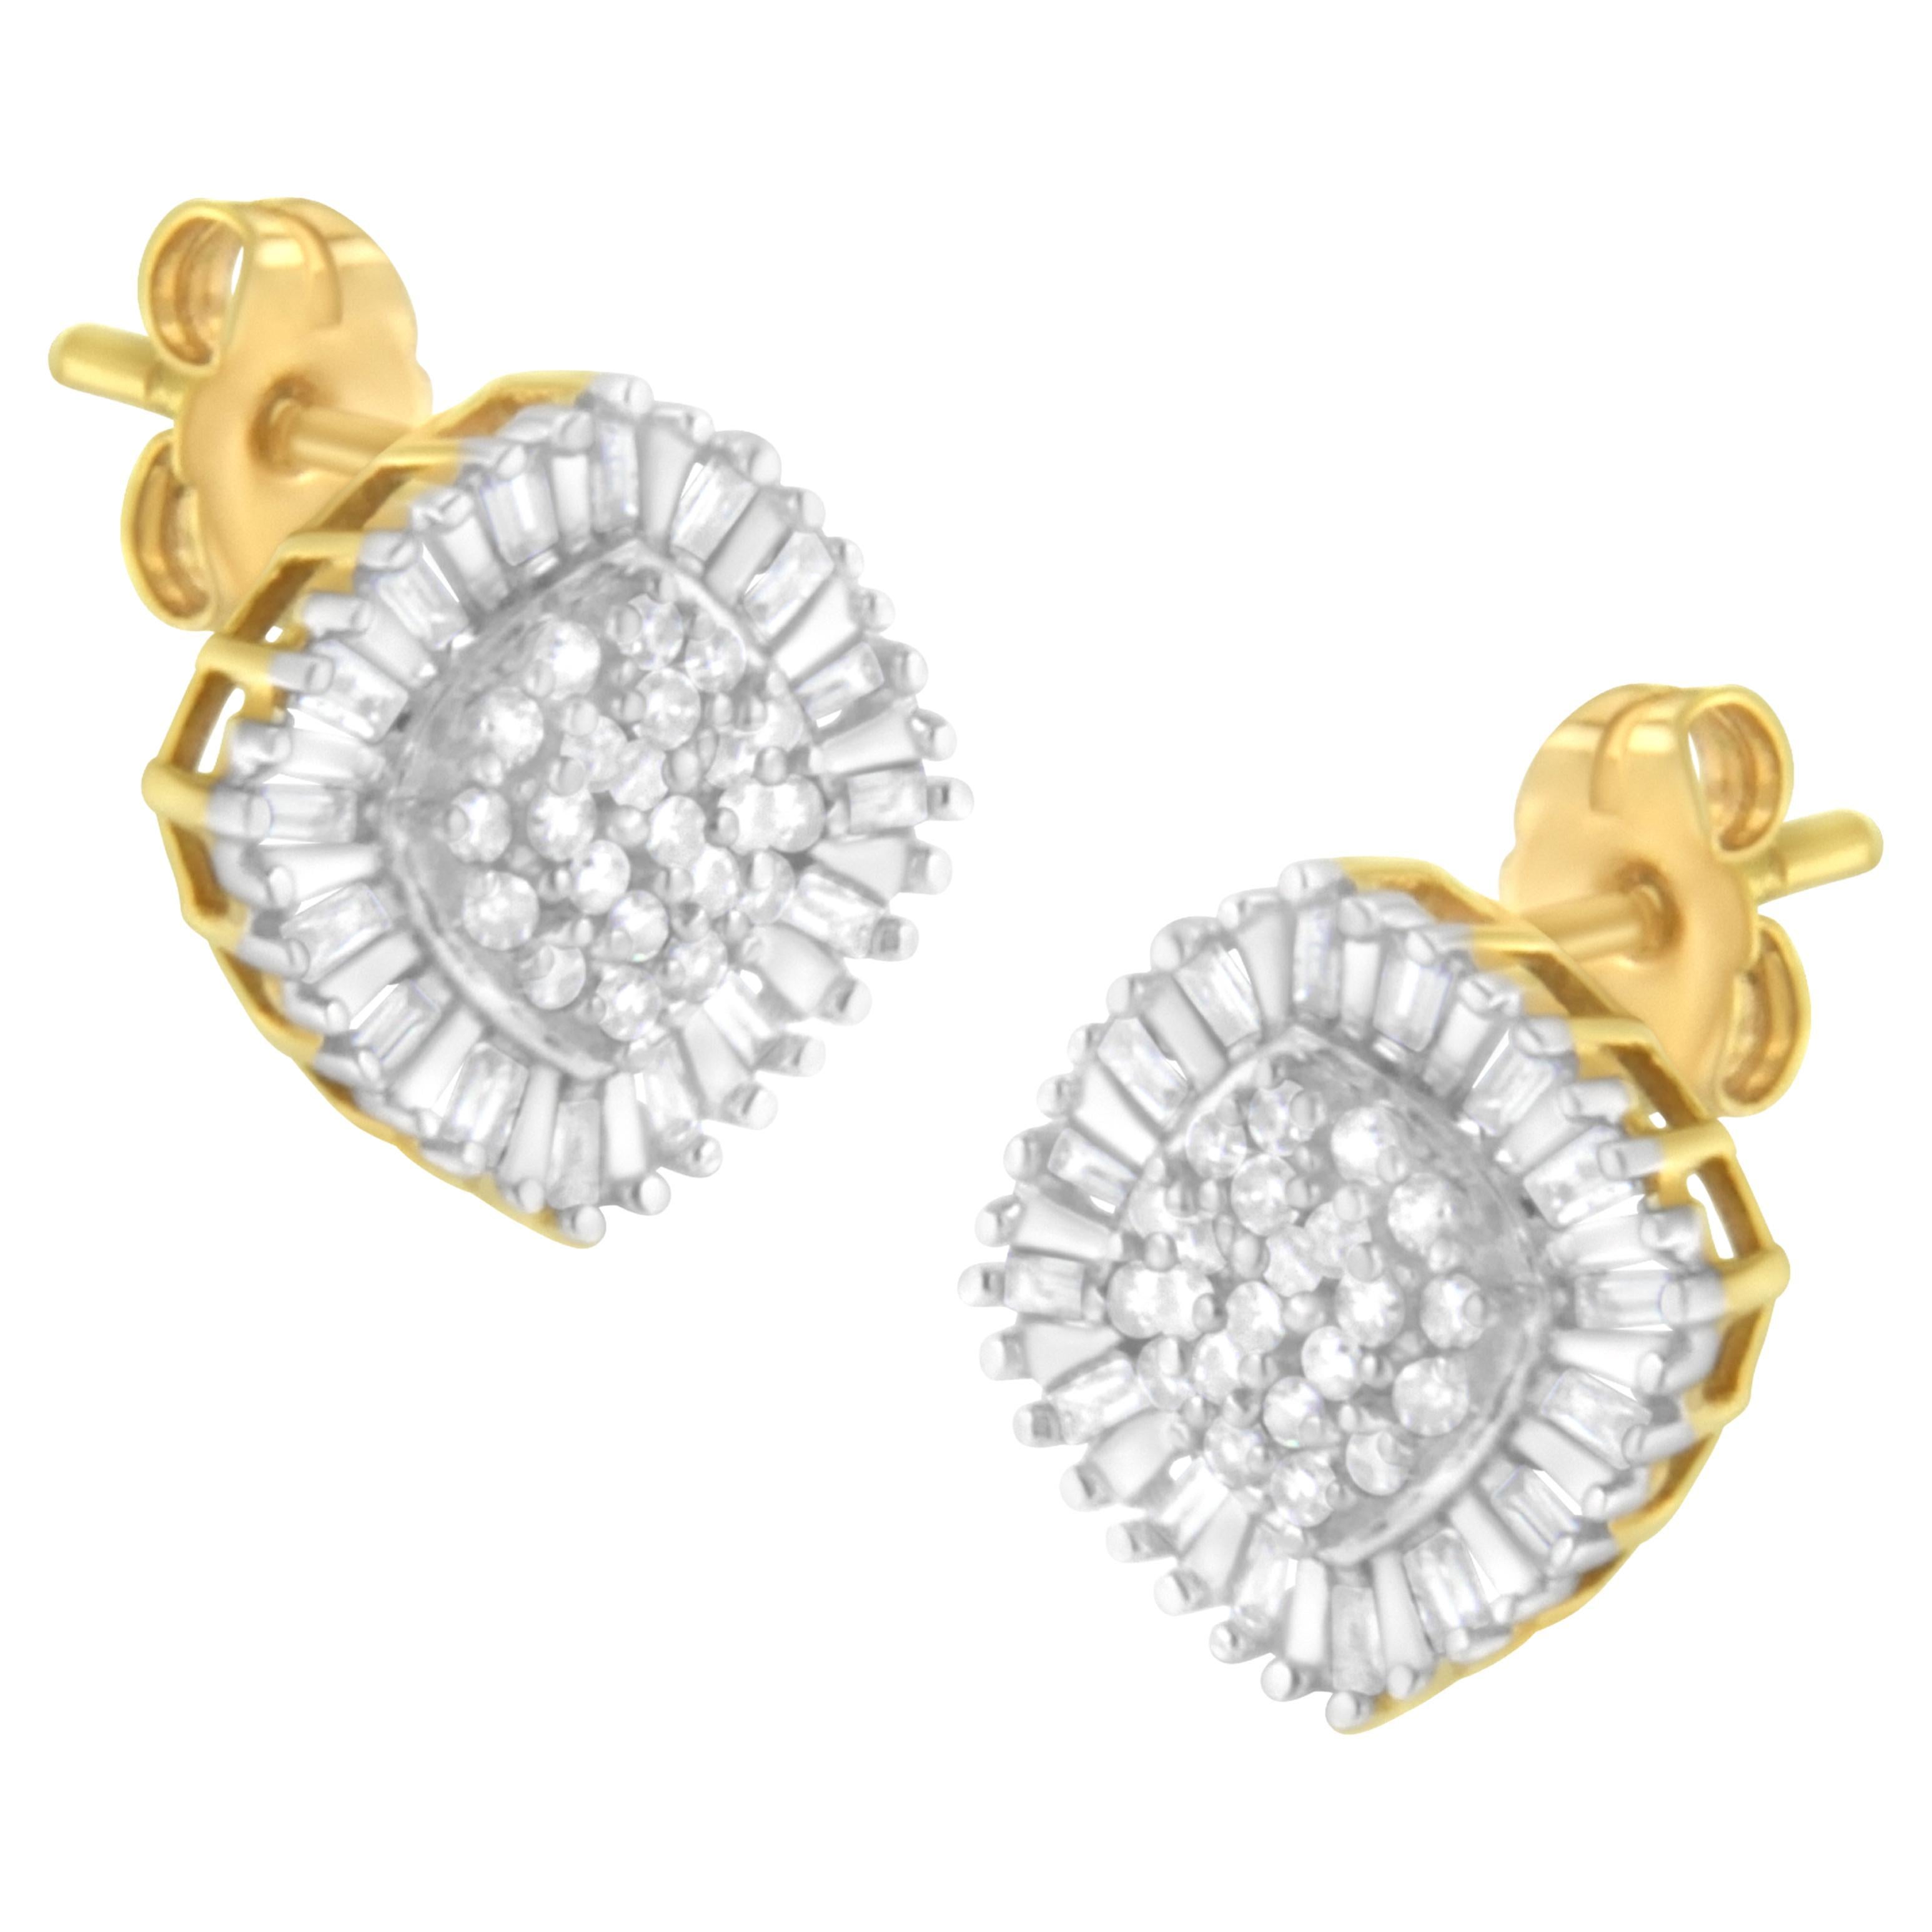 10K Yellow Gold 1/2 Carat Diamond Cluster Cocktail Stud Earrings